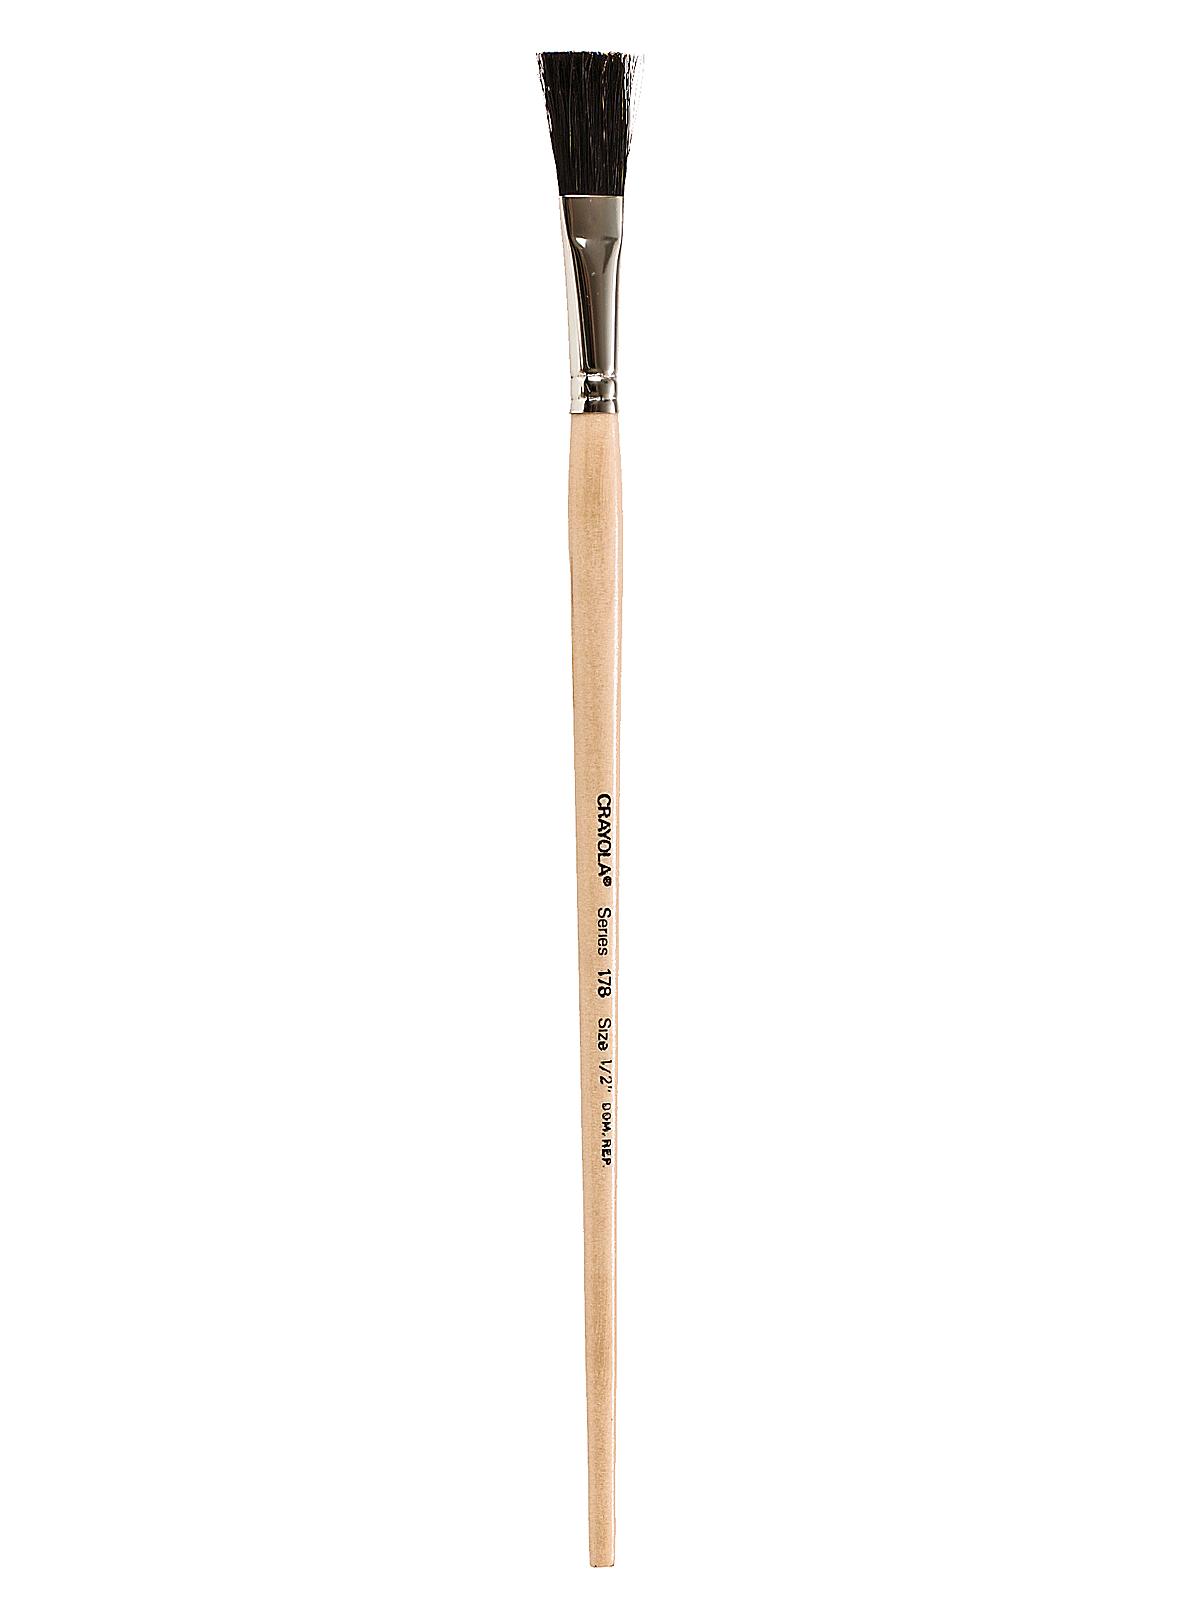 Series 178 Long Handled Black Bristle Brushes 1 2 In.